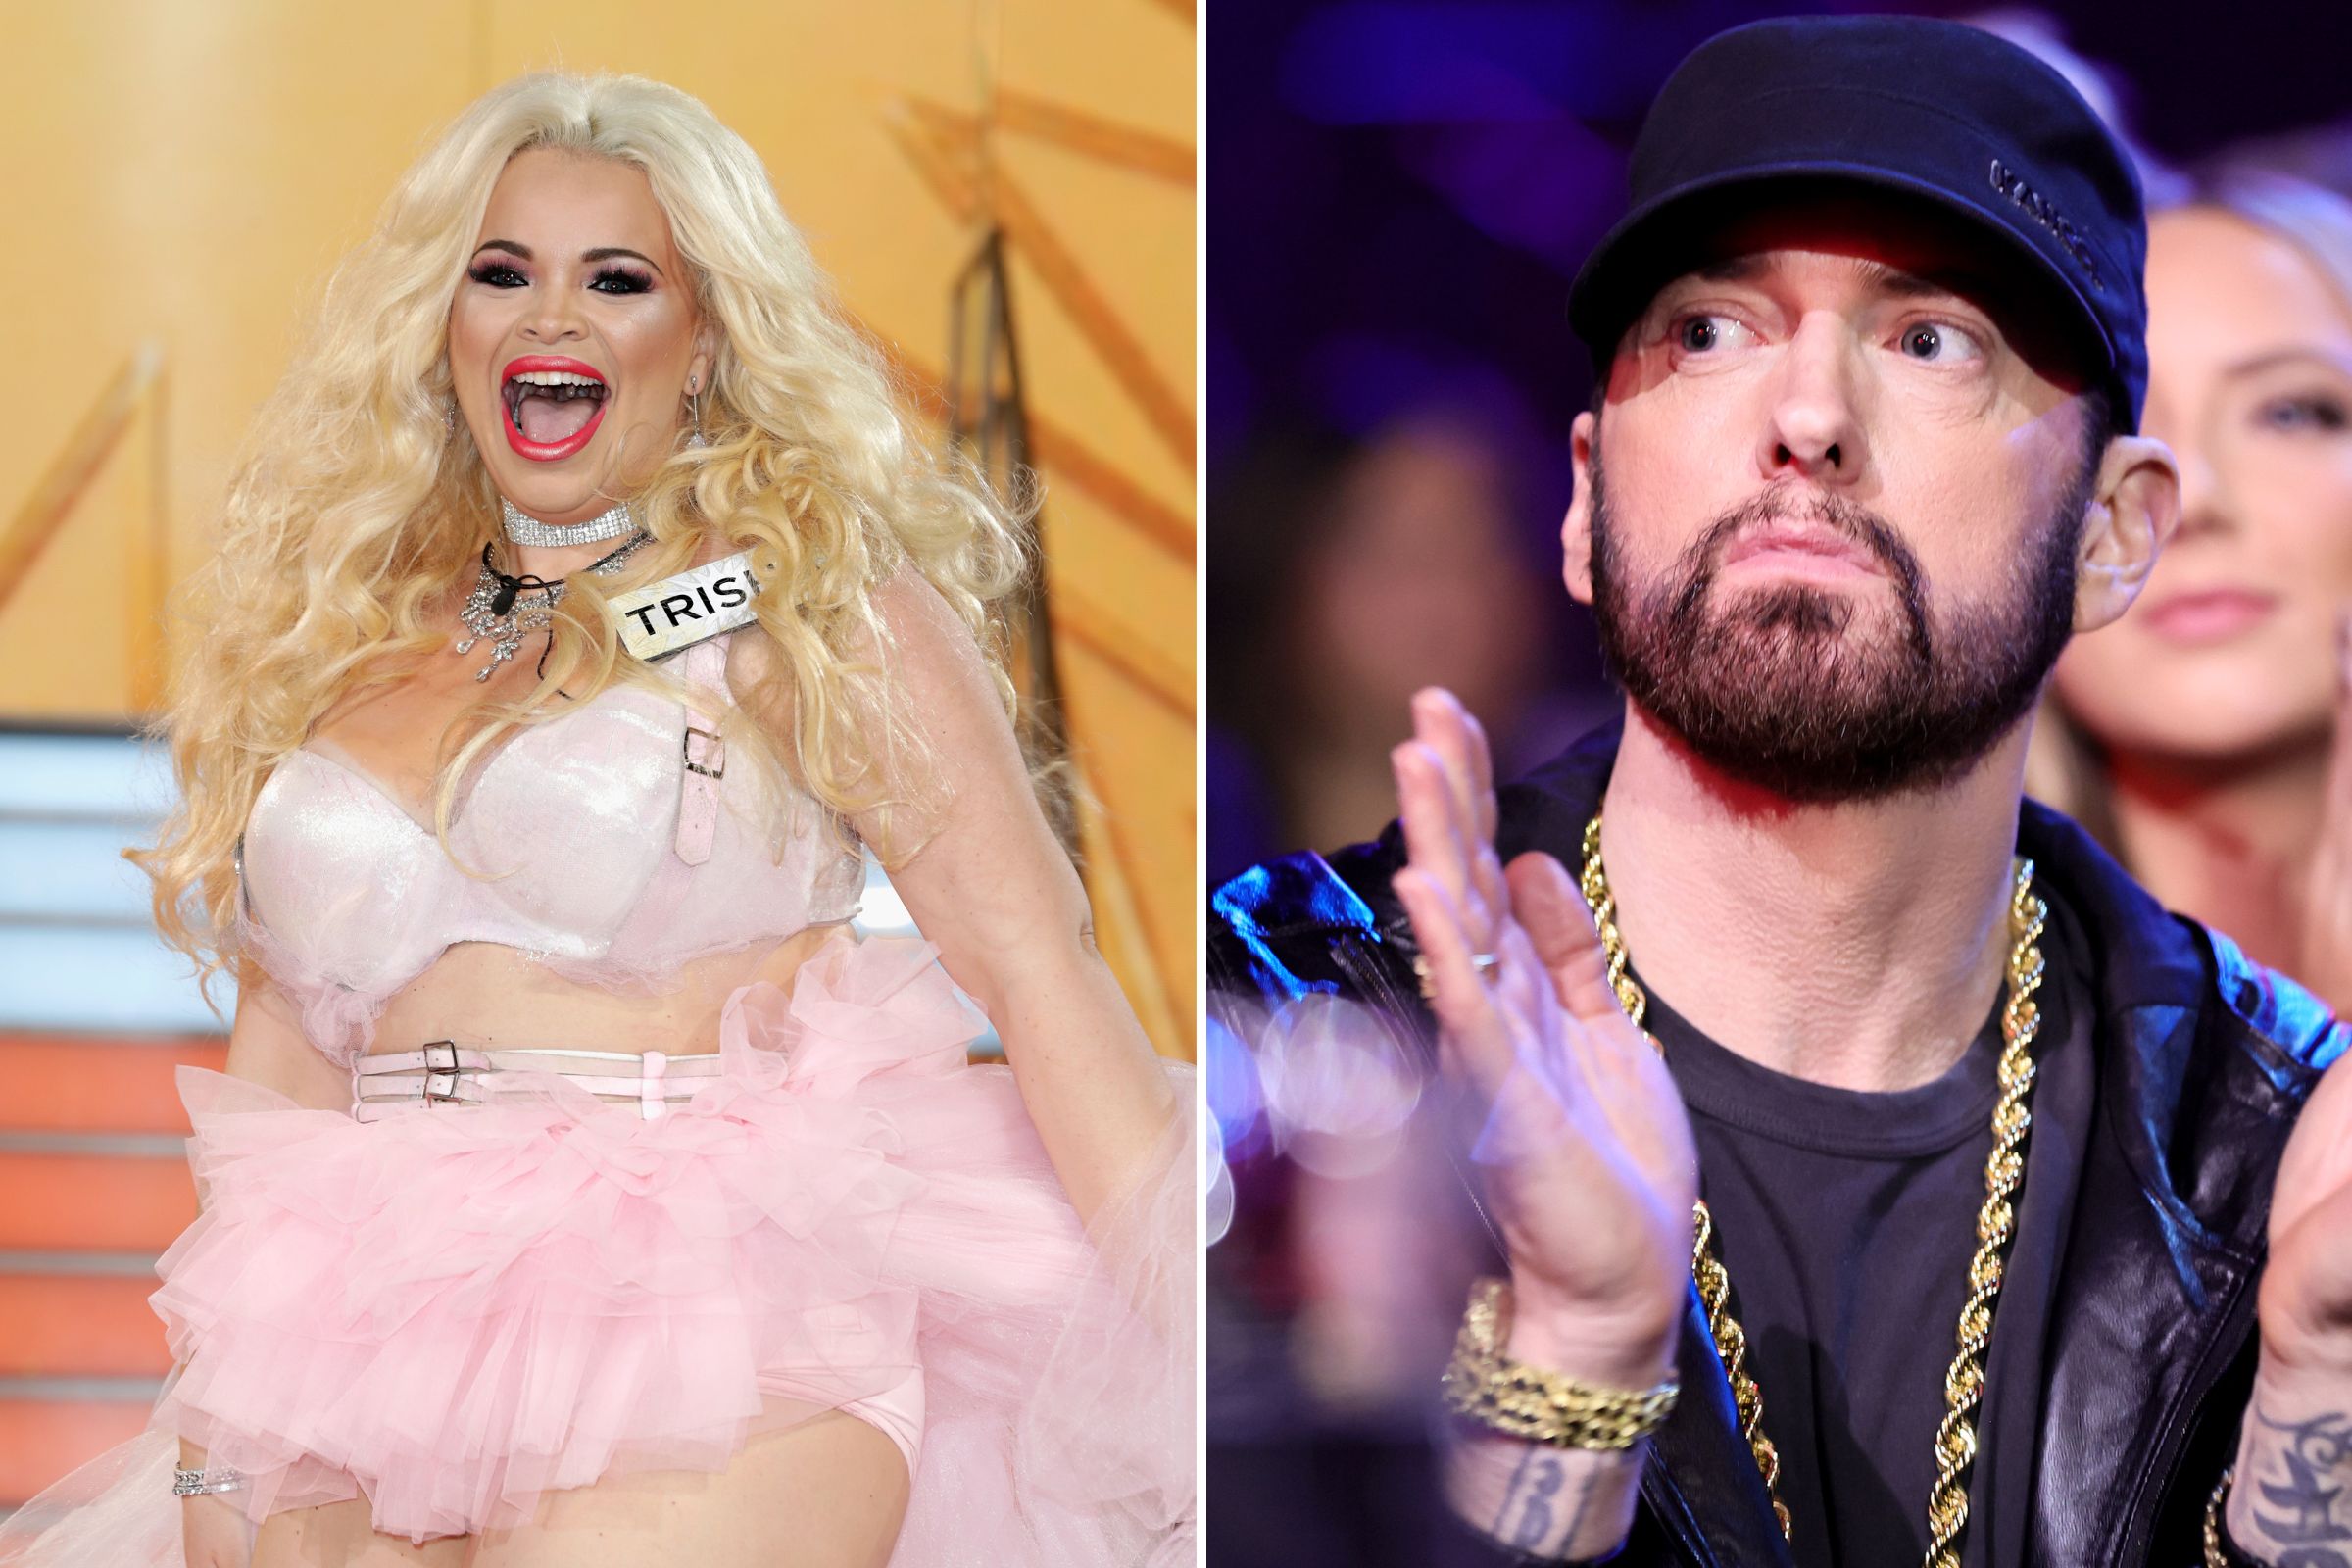 Real Eminem Porn - Trisha Paytas Reacts to Eminem Video Resurfacingâ€”'I Will Always Be an Icon'